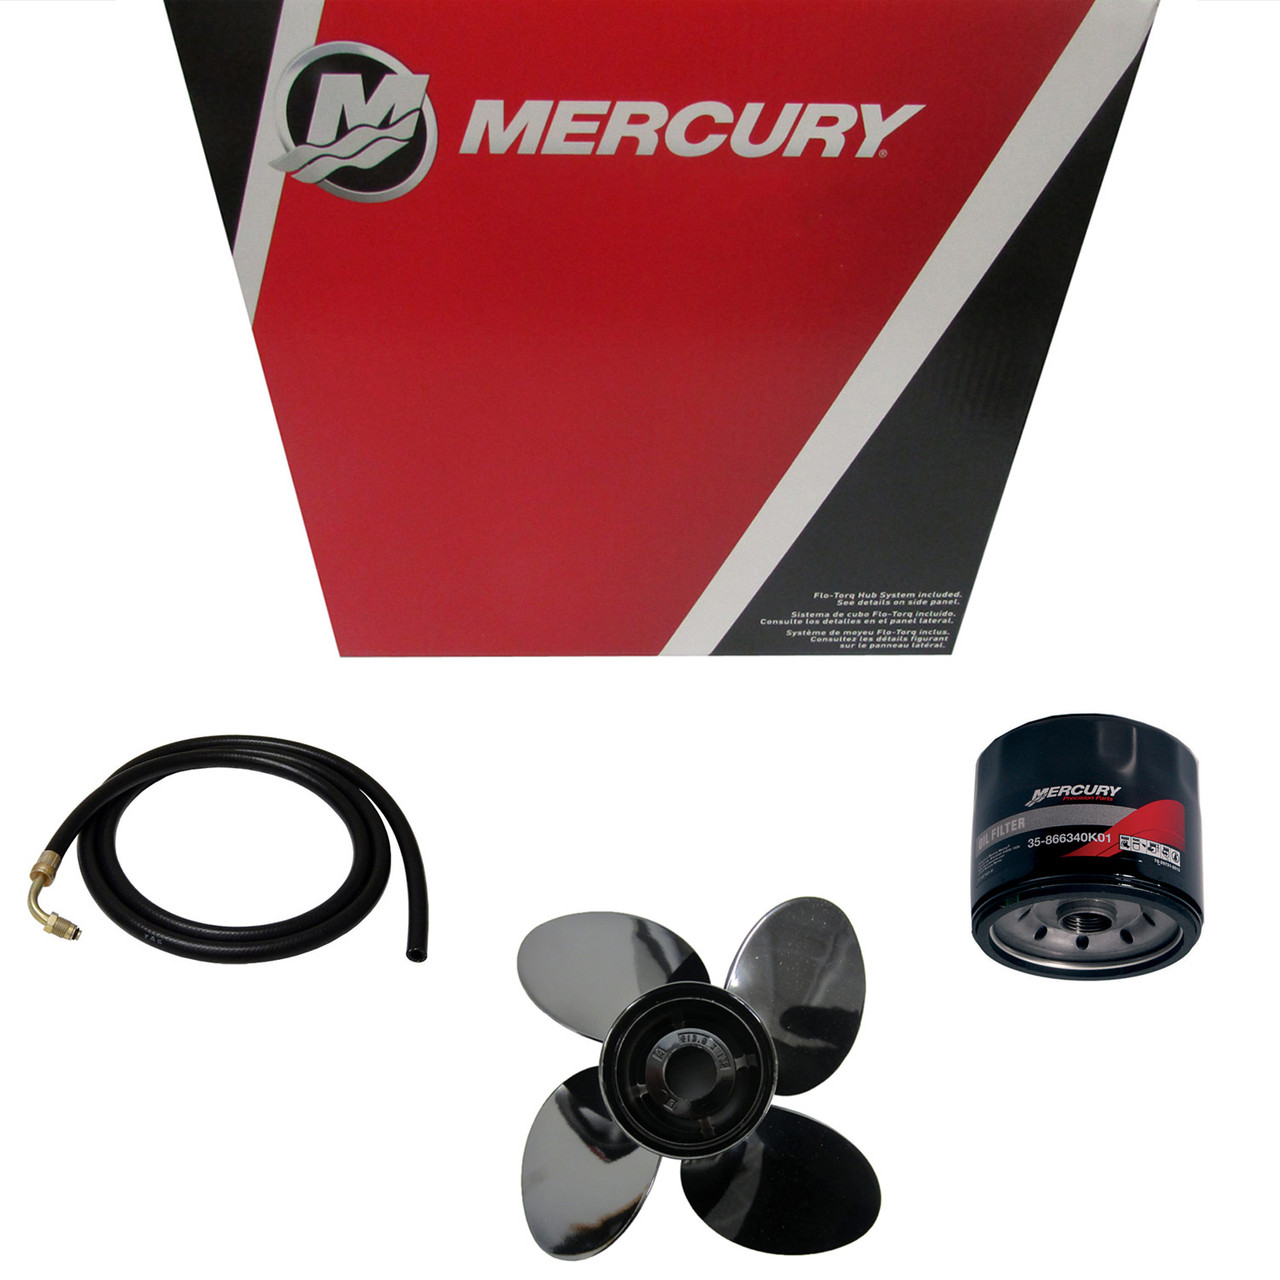 Mercury Marine / Mercruiser New OEM Solenoid, 89-819503T6